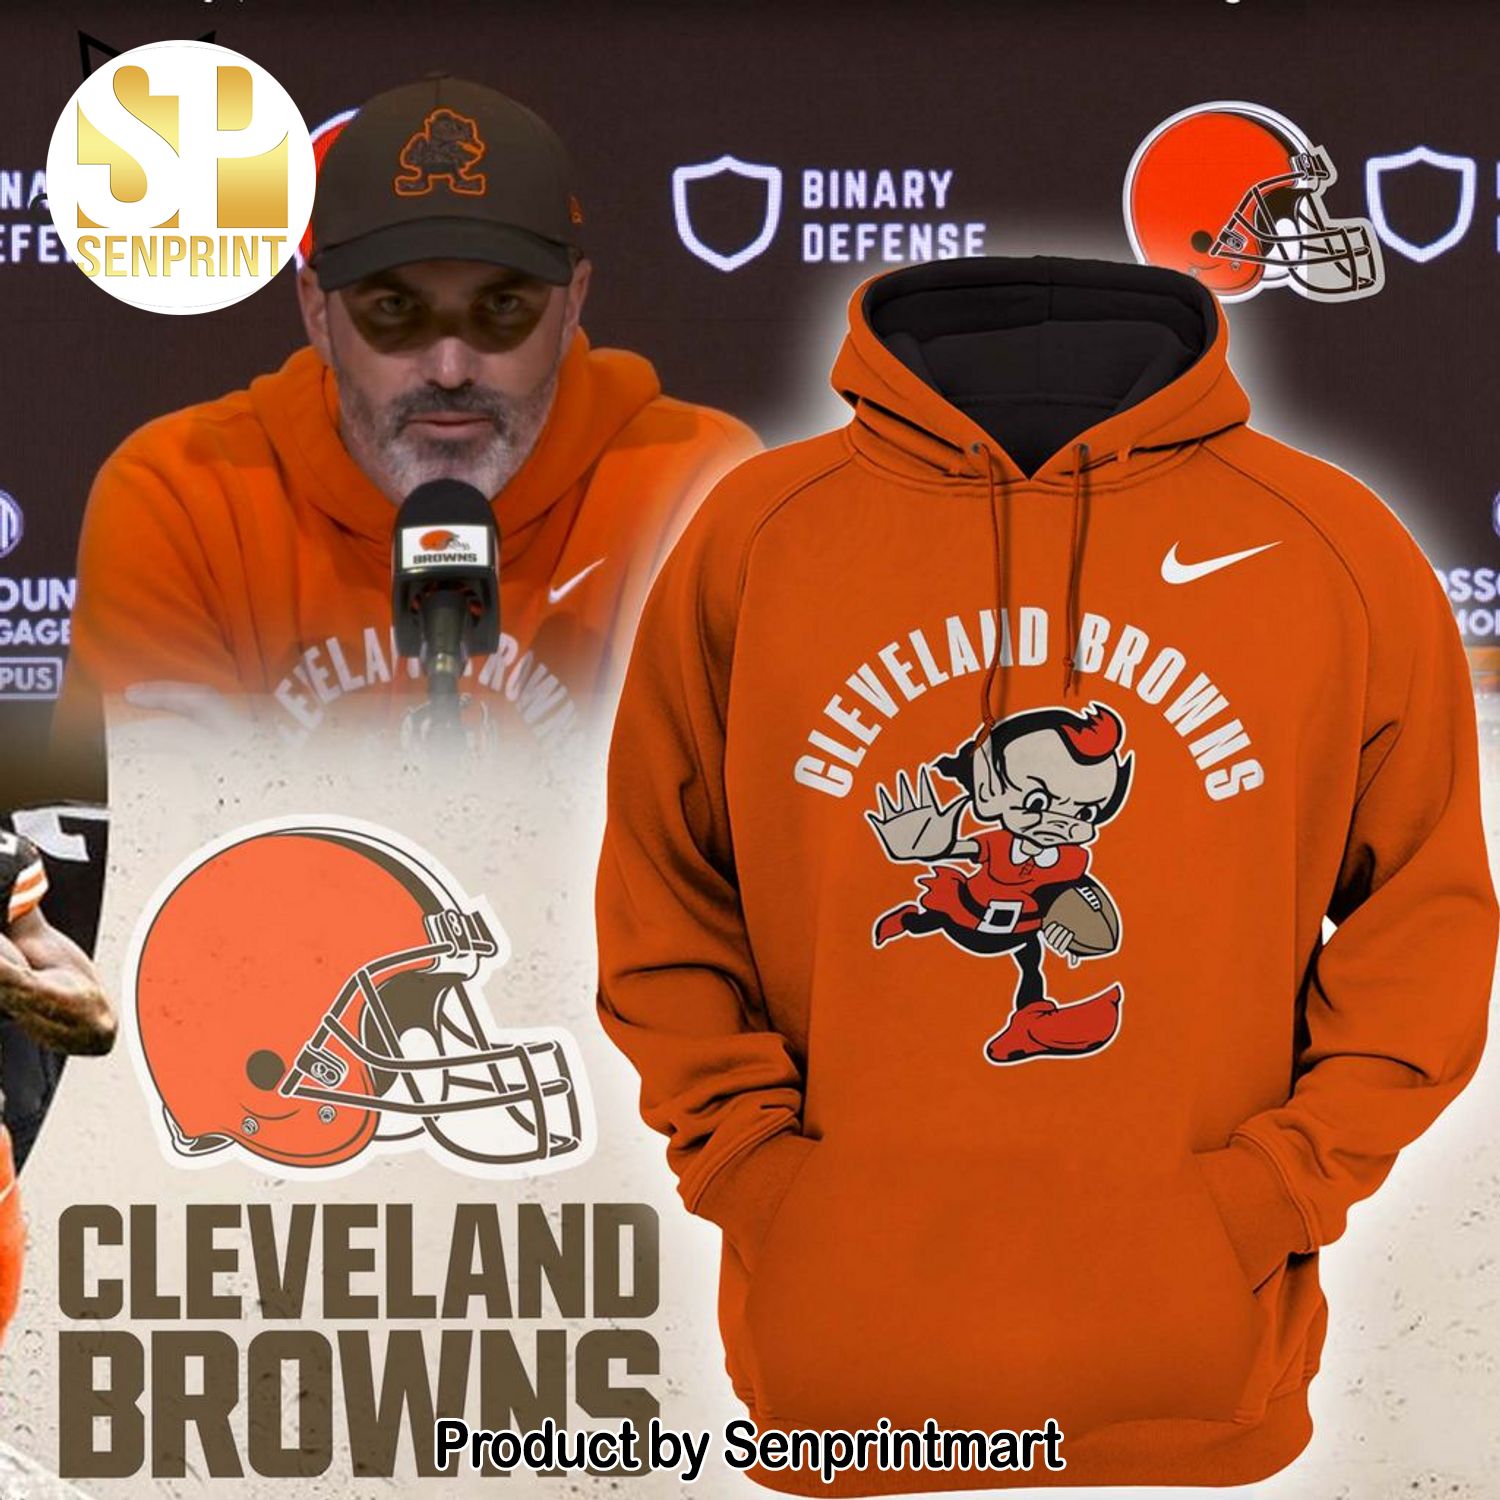 Cleveland Browns Mascot Logo Orange Design Full Printing Shirt